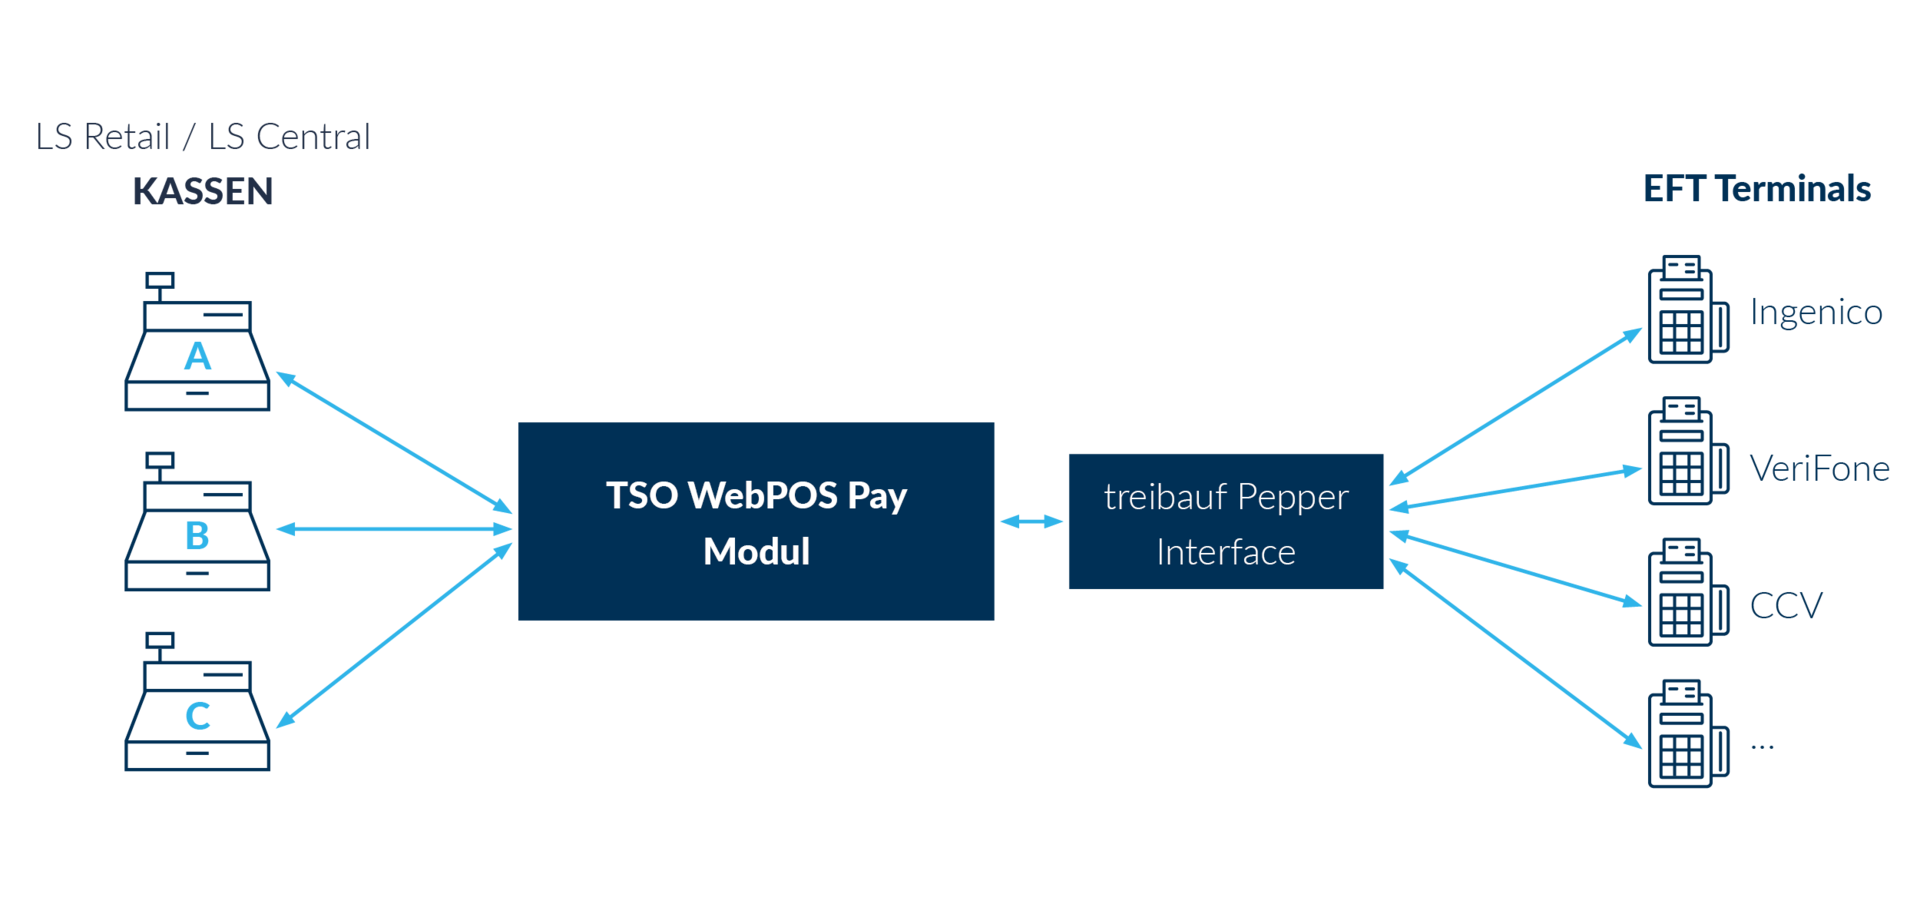 Wie funktioniert TSO WebPOS Pay?